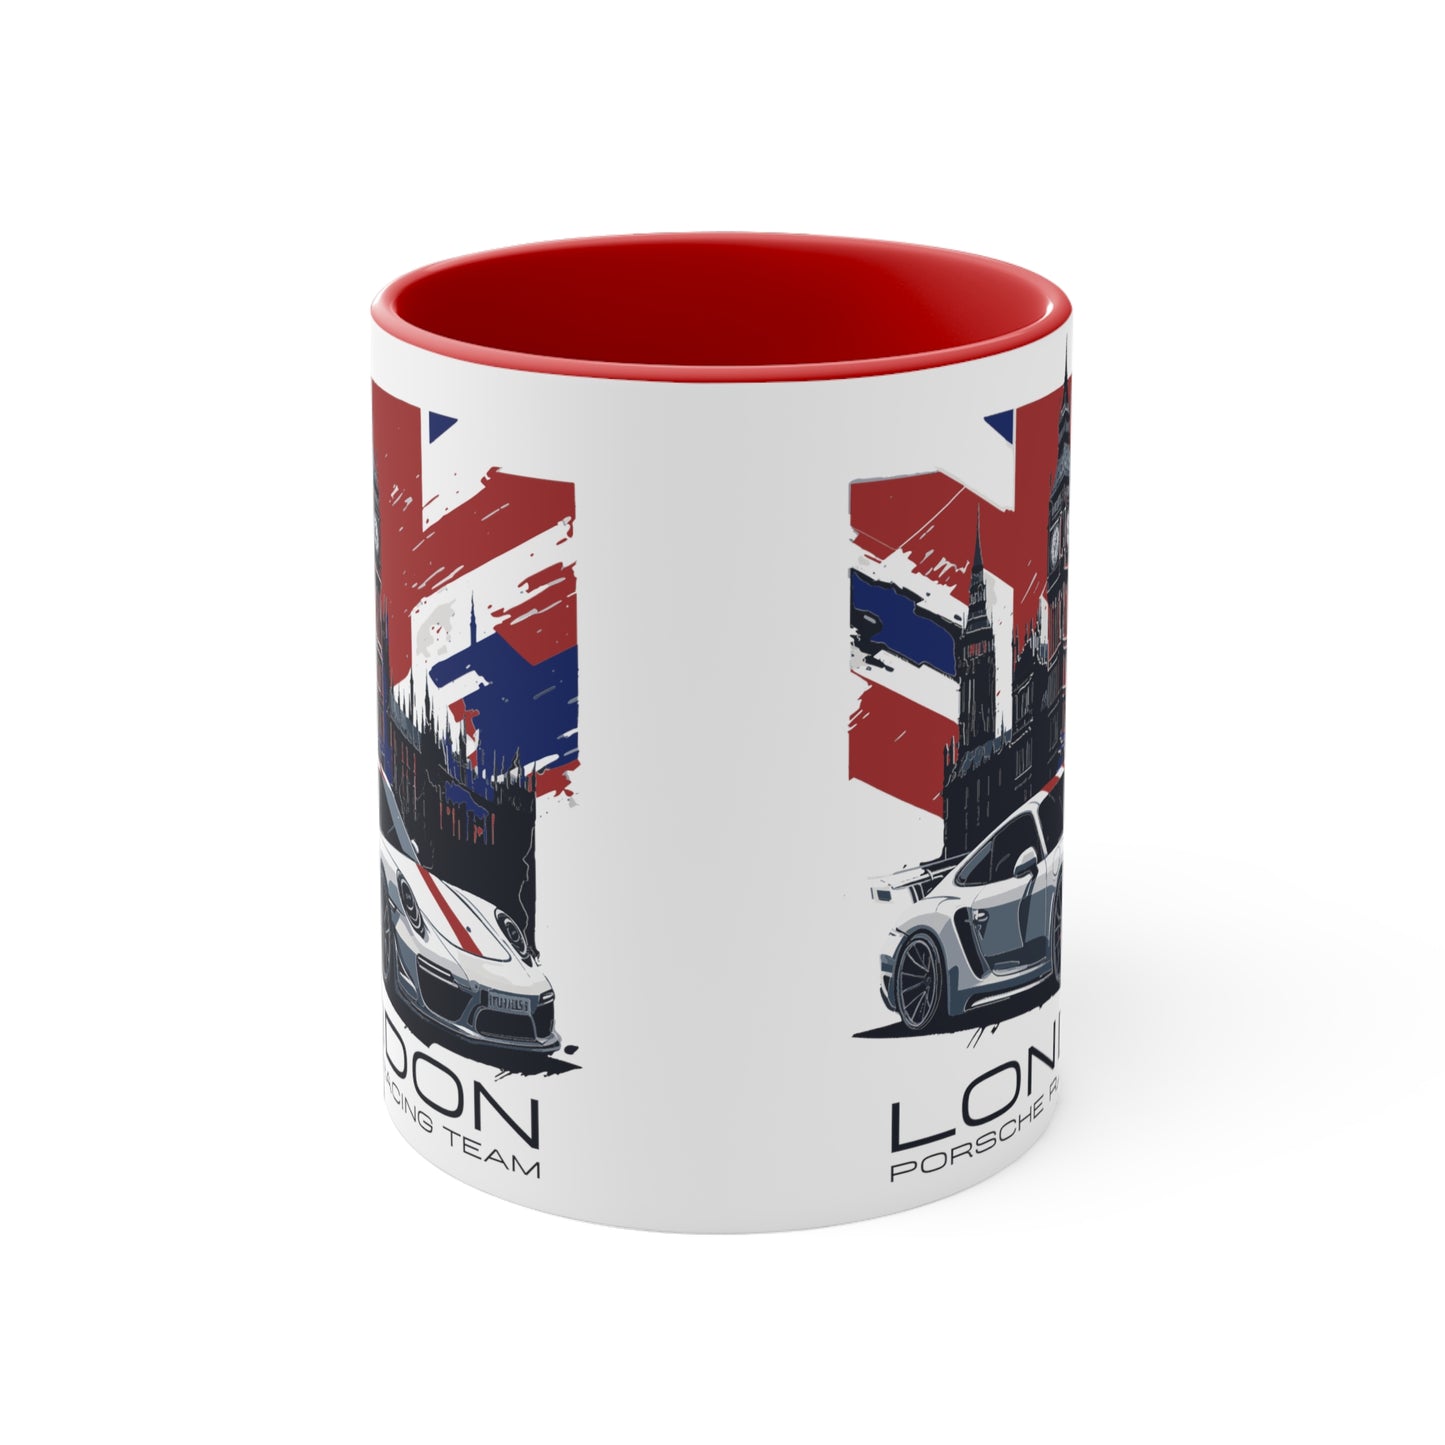 LONDON Accent Coffee Mug, 11oz